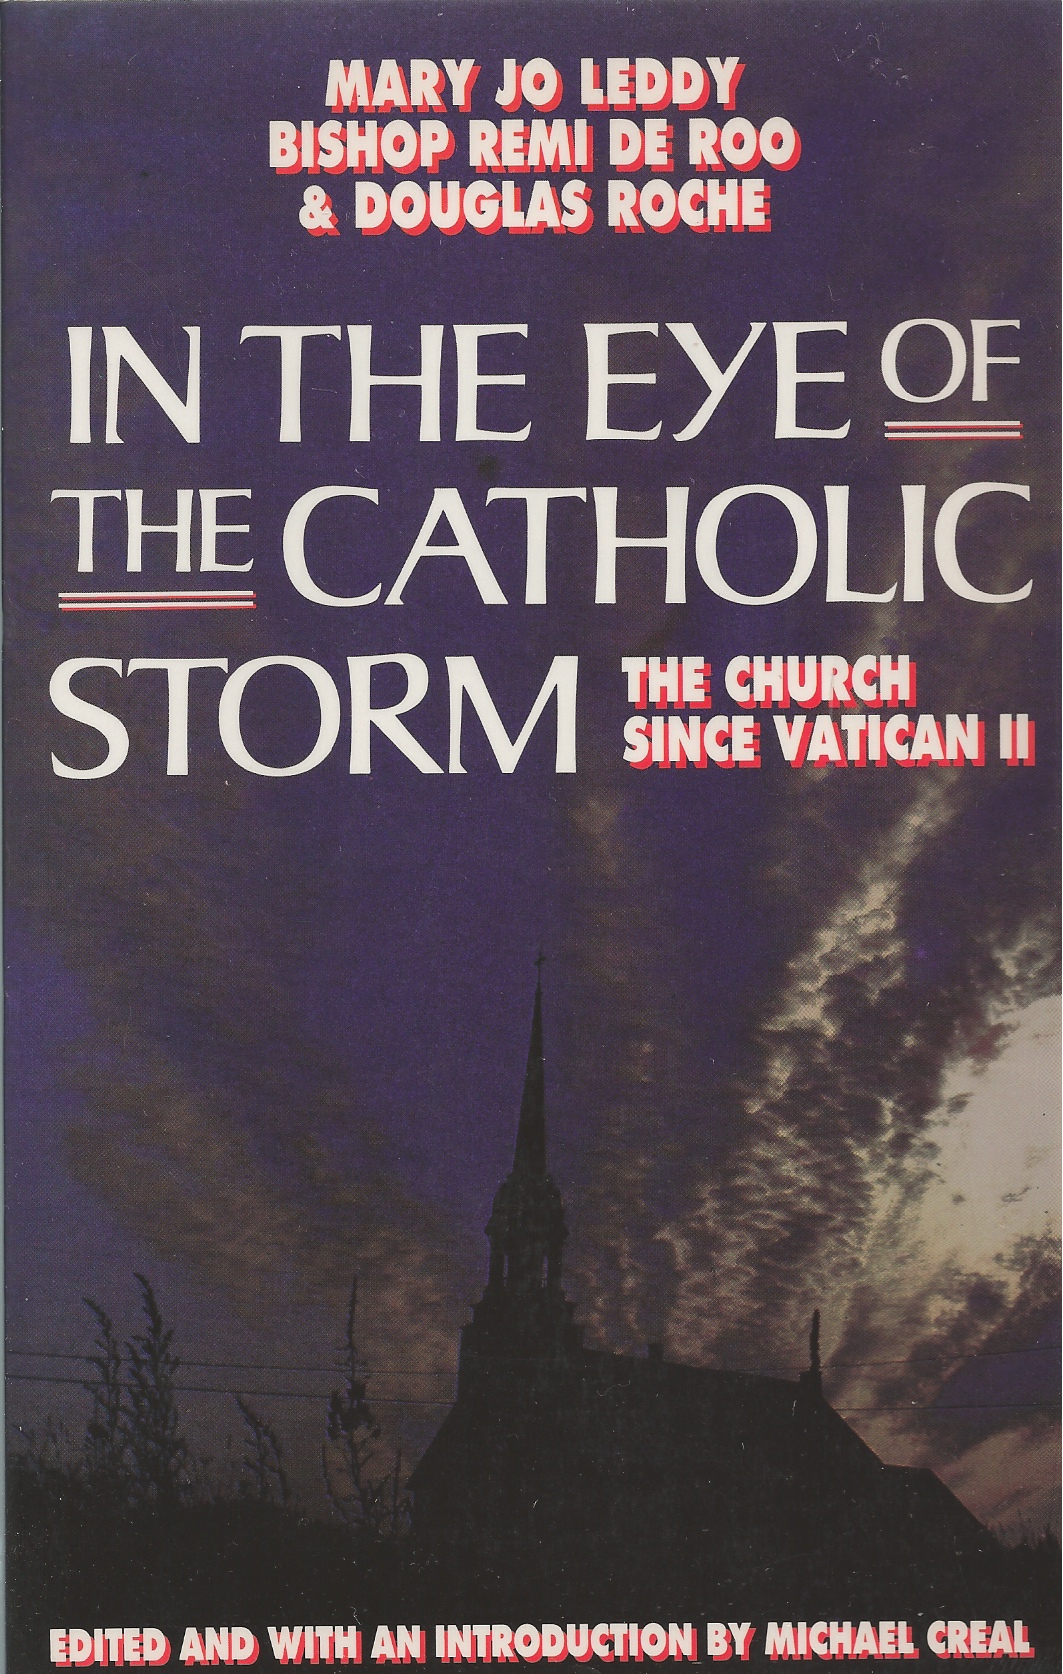 LEDDY MARY JO, DE ROO REMI, ROCHE DOUGLAS - In the Eye of the Catholic Storm the Church Since Vatican II